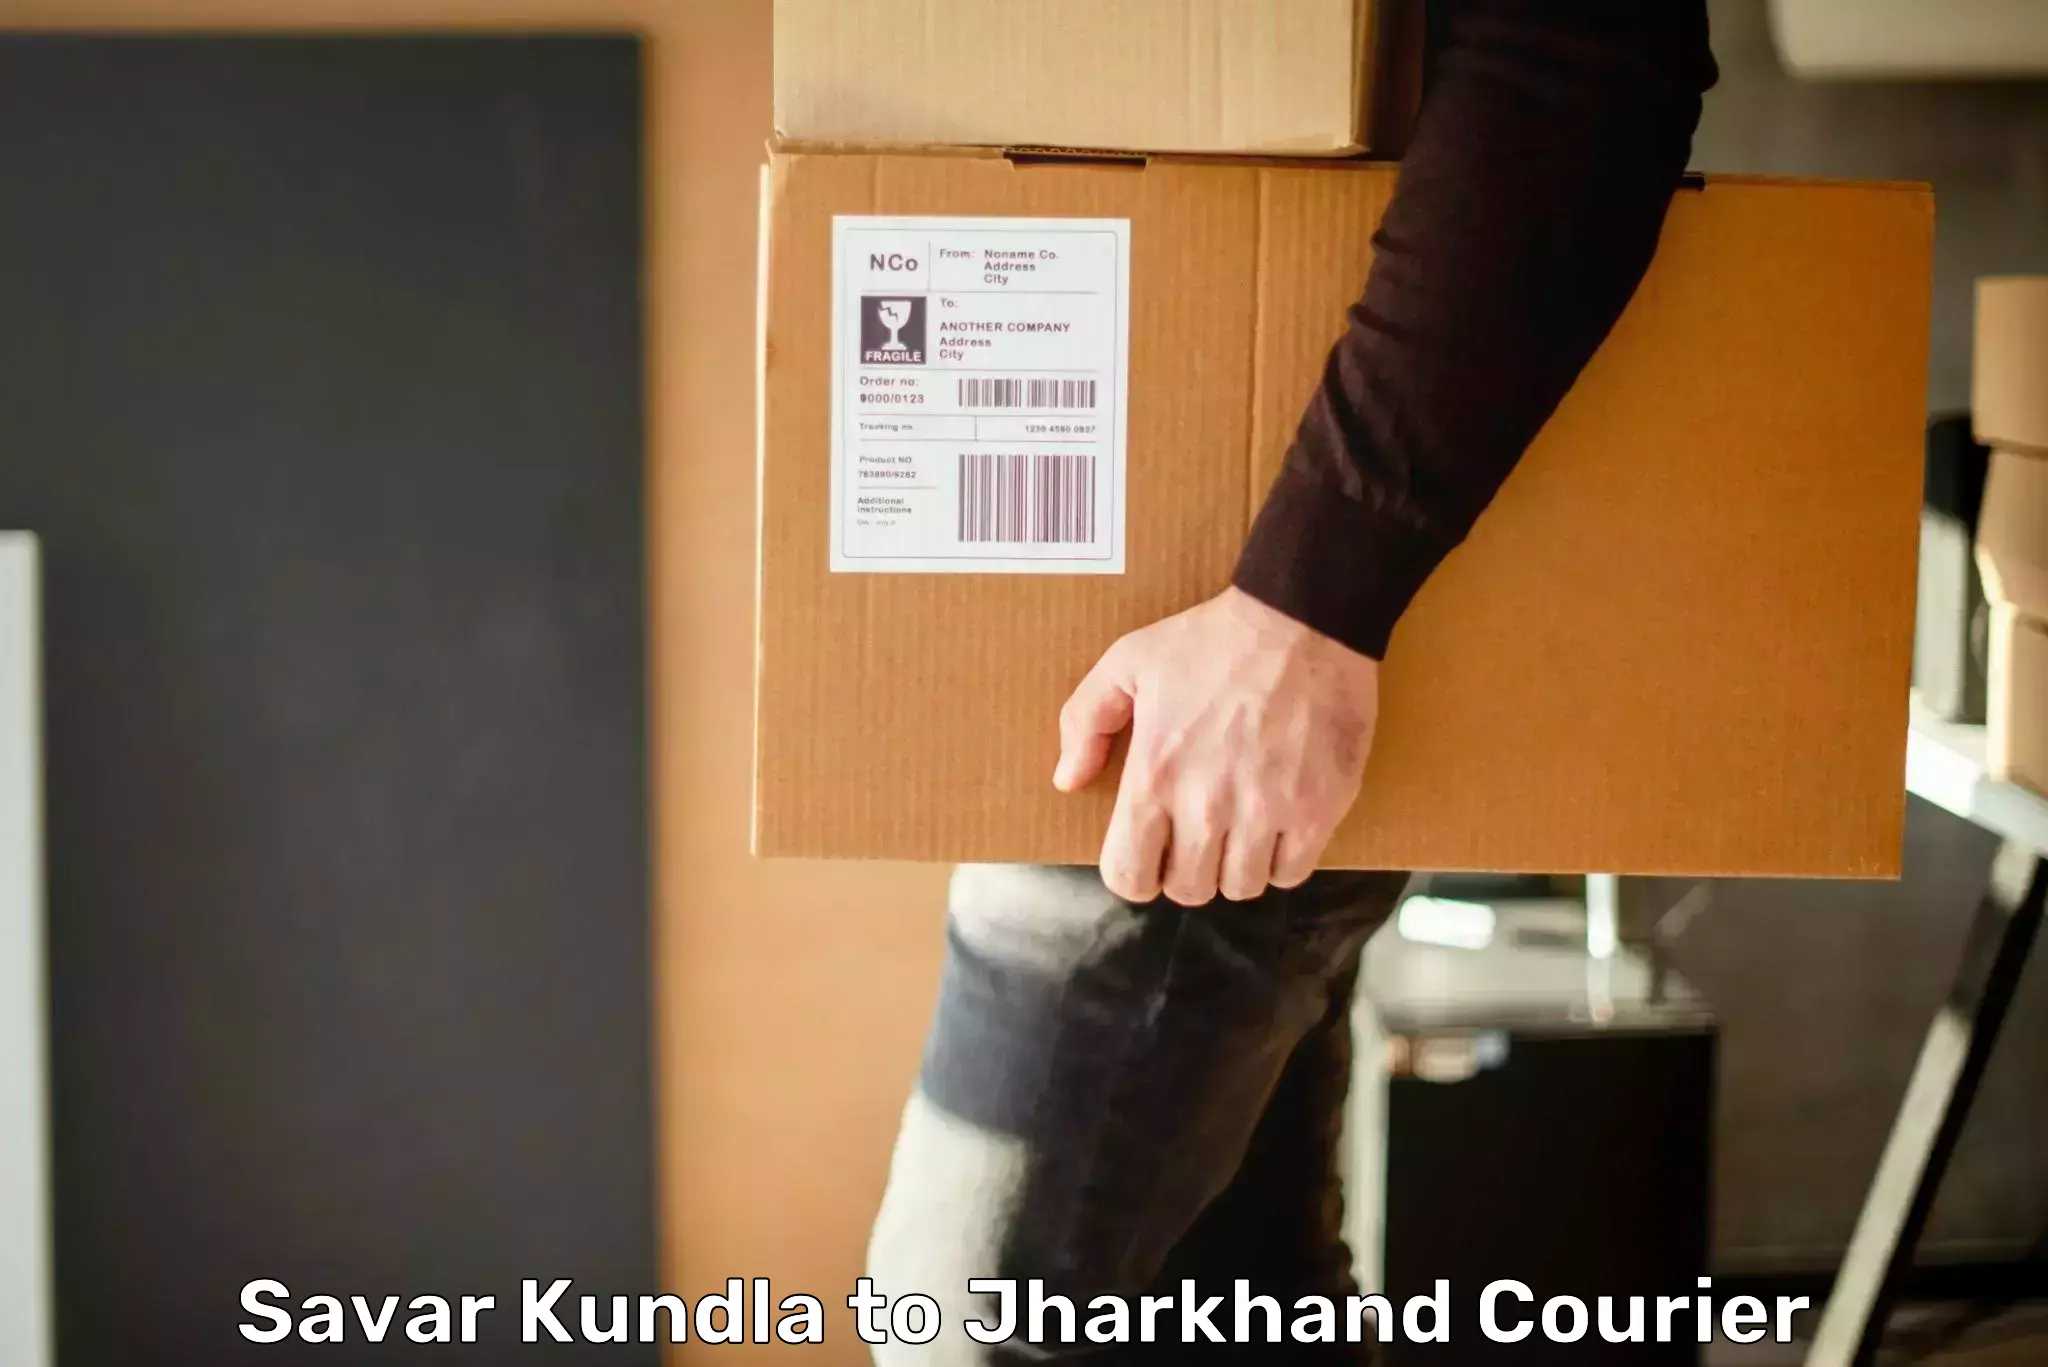 Express package handling Savar Kundla to Kedla